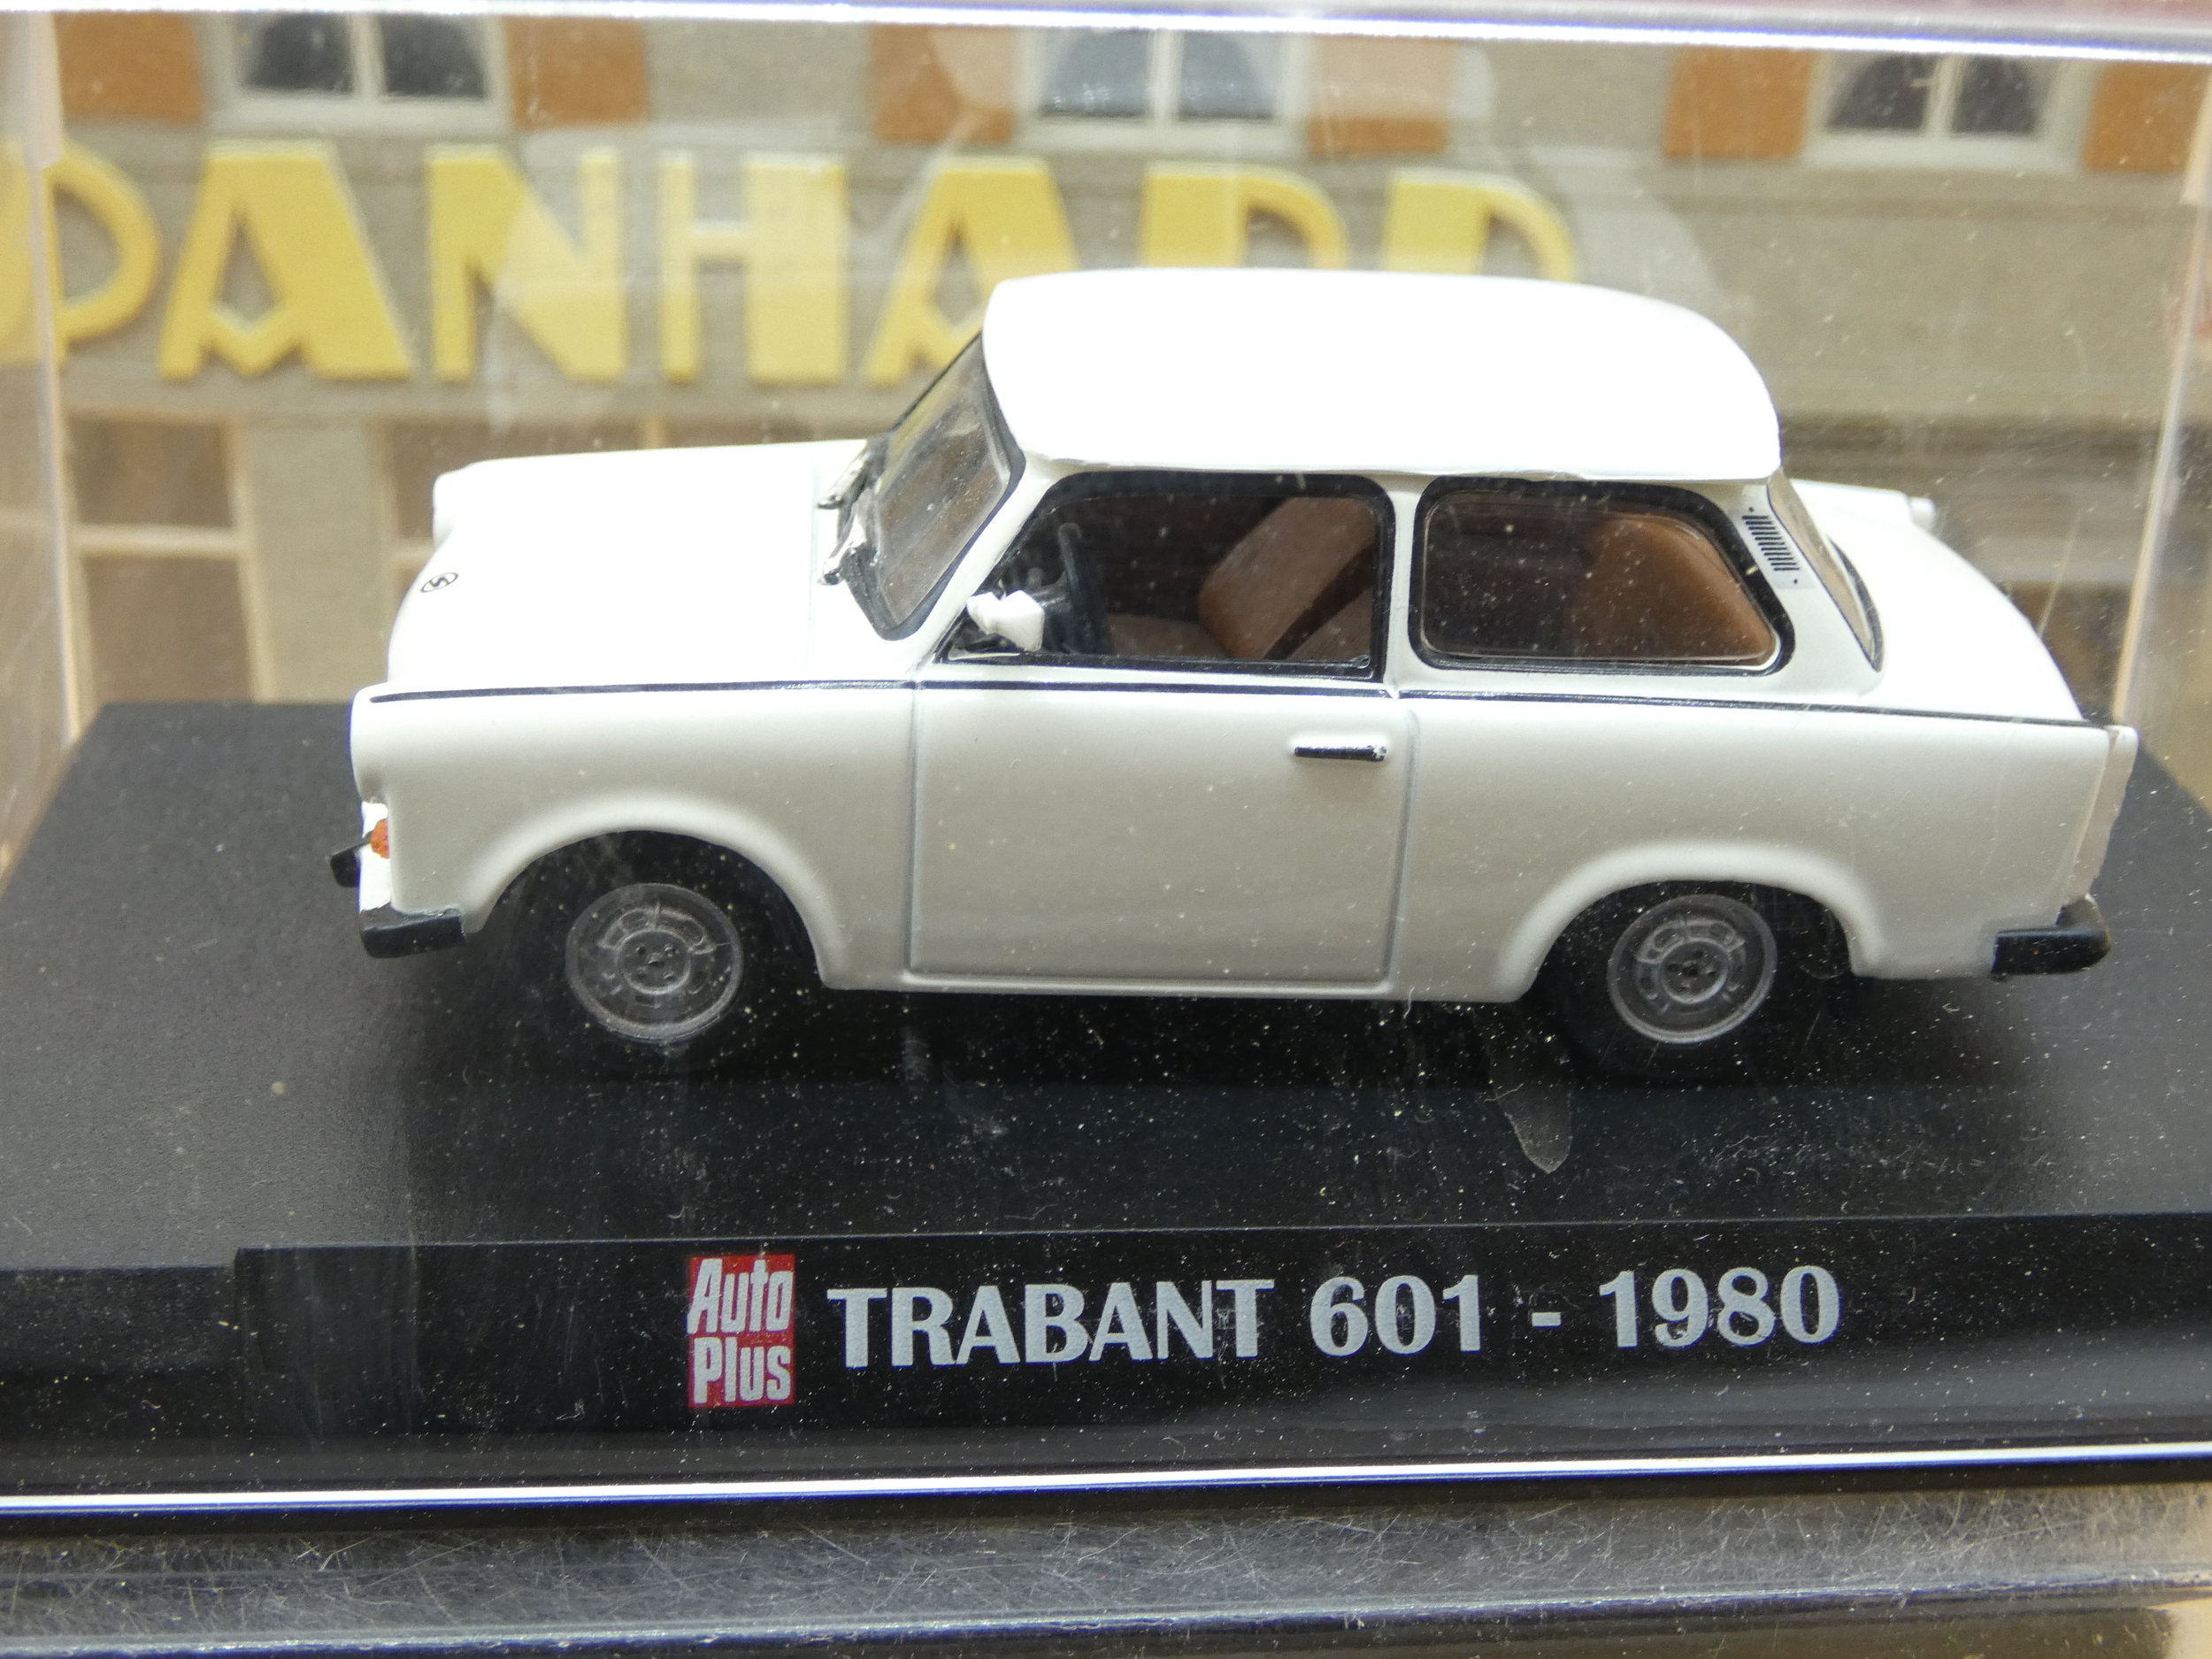 TRABANT 601 1980 1/43 IXO AUTO-PLUS NEUF BOITE ORIGINE